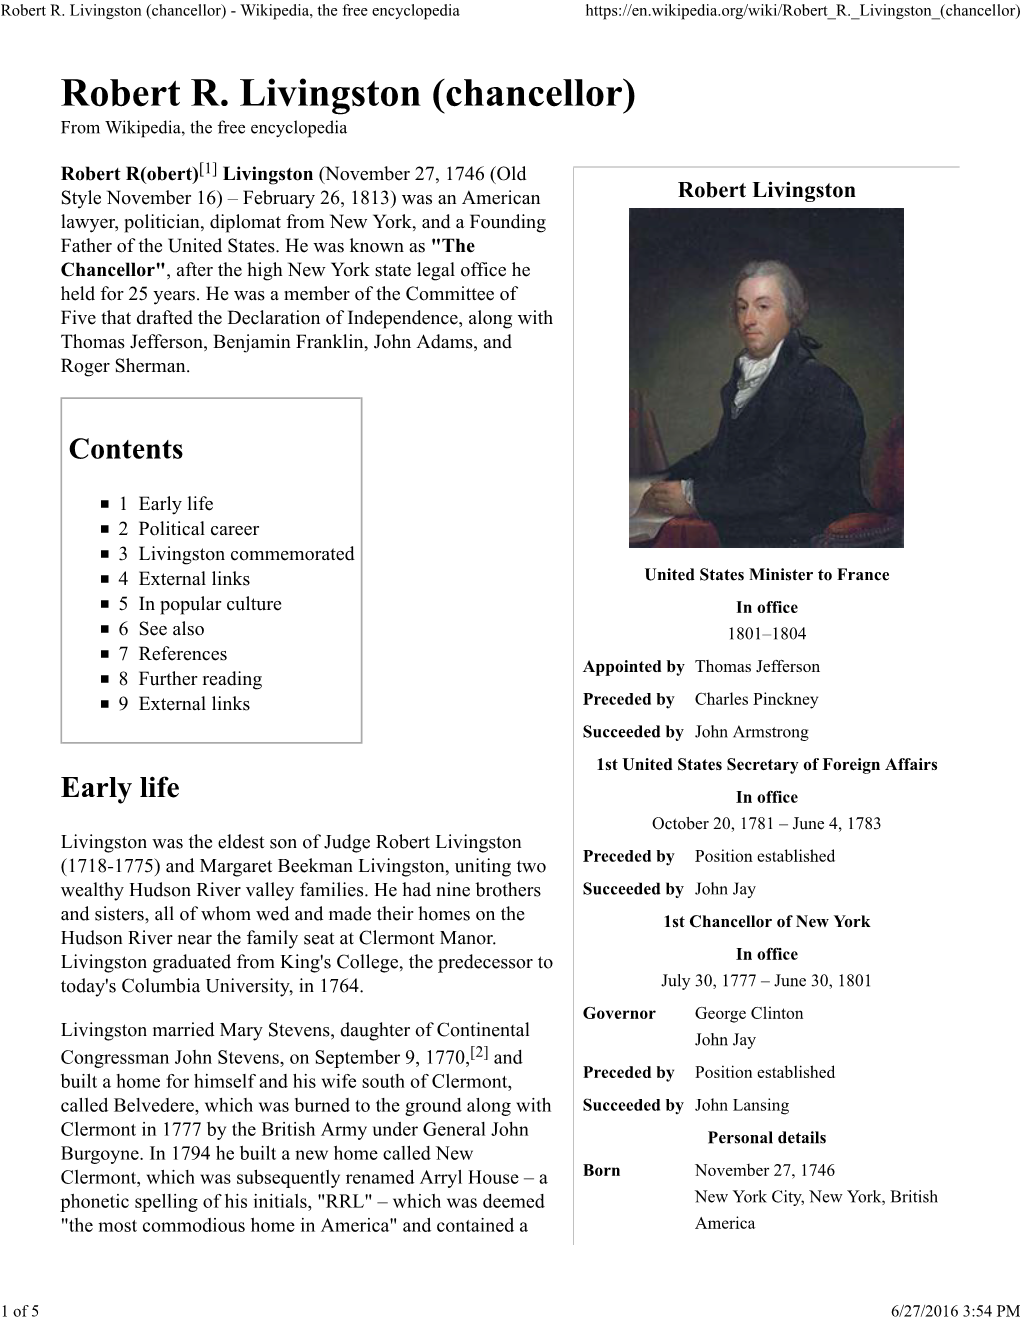 Robert R. Livingston (Chancellor) - Wikipedia, the Free Encyclopedia